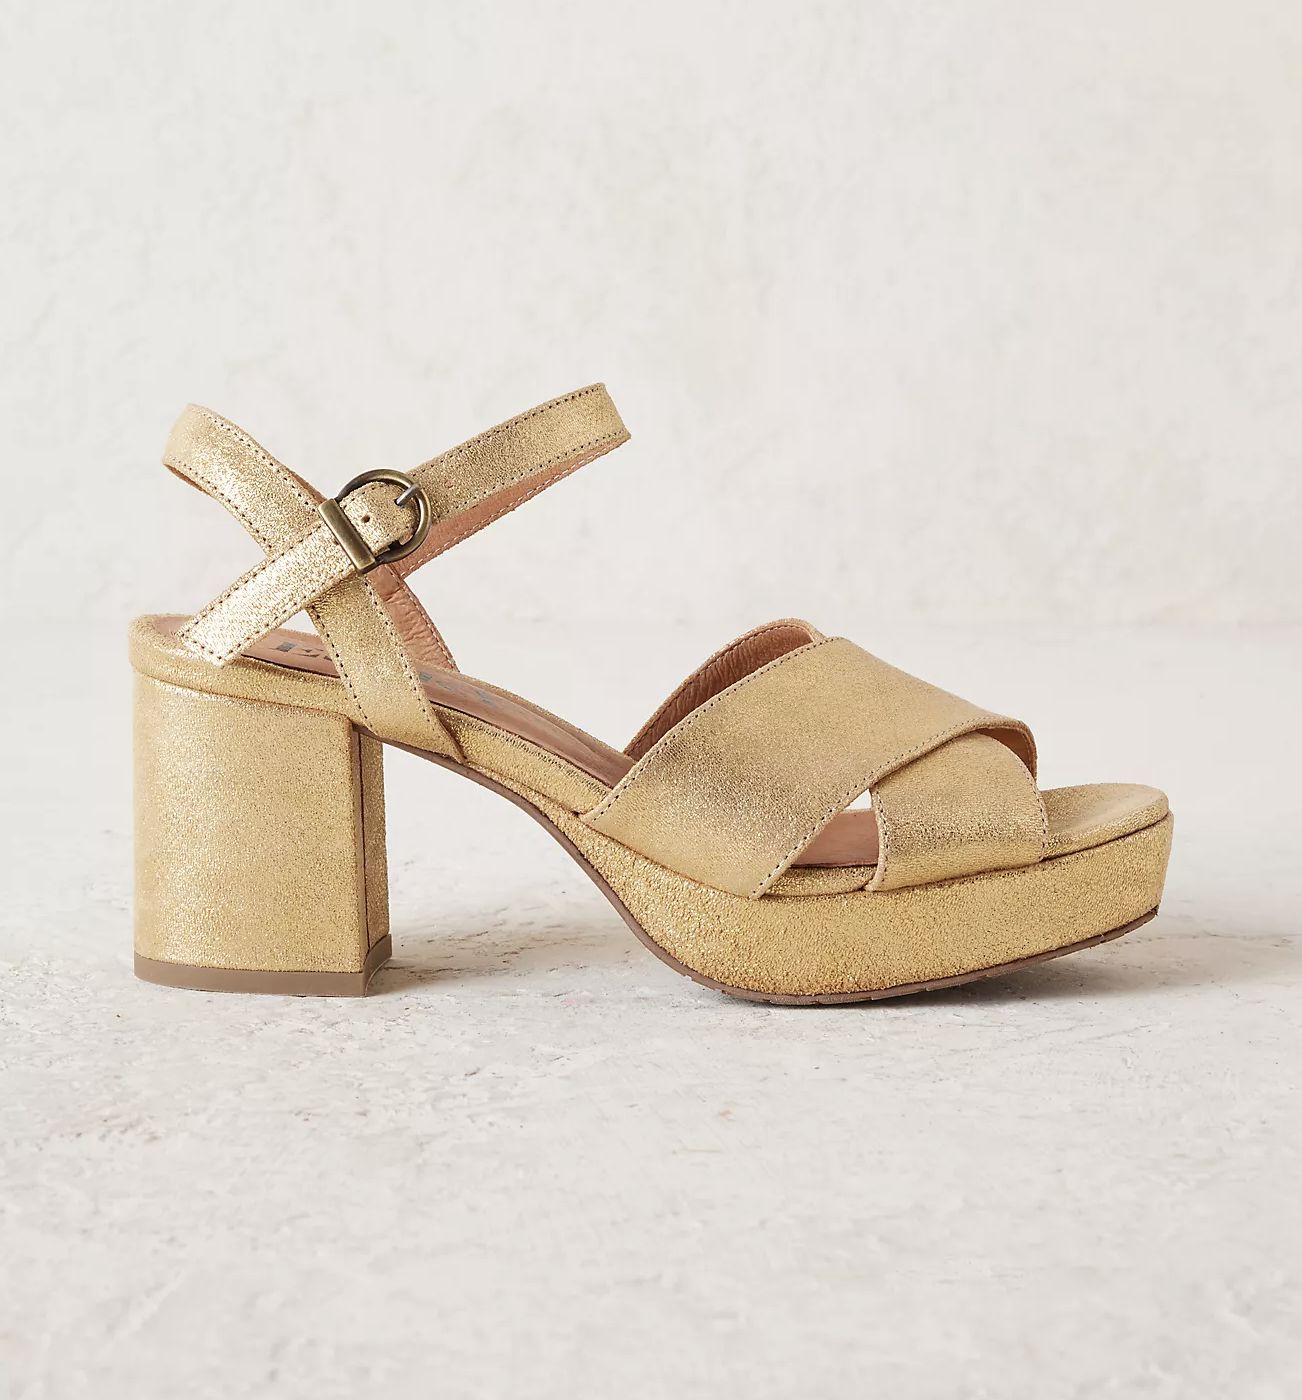 Esska Clara Gold Wedding Shoes, Metallic Block Heels